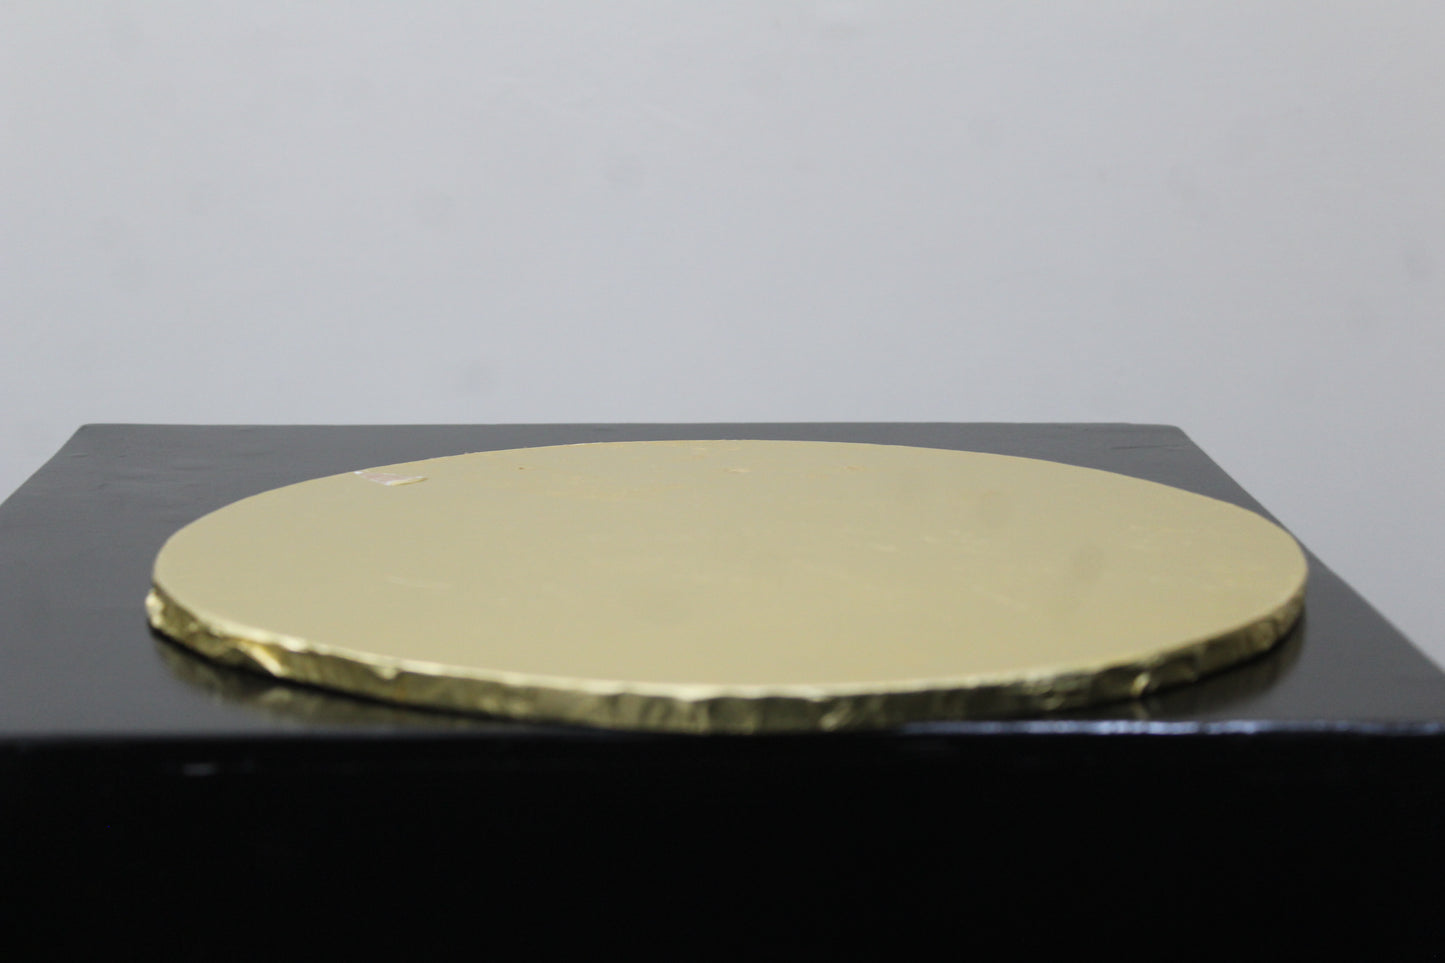 6 inch Cake Drum Board - White/Black/Golden/Silver